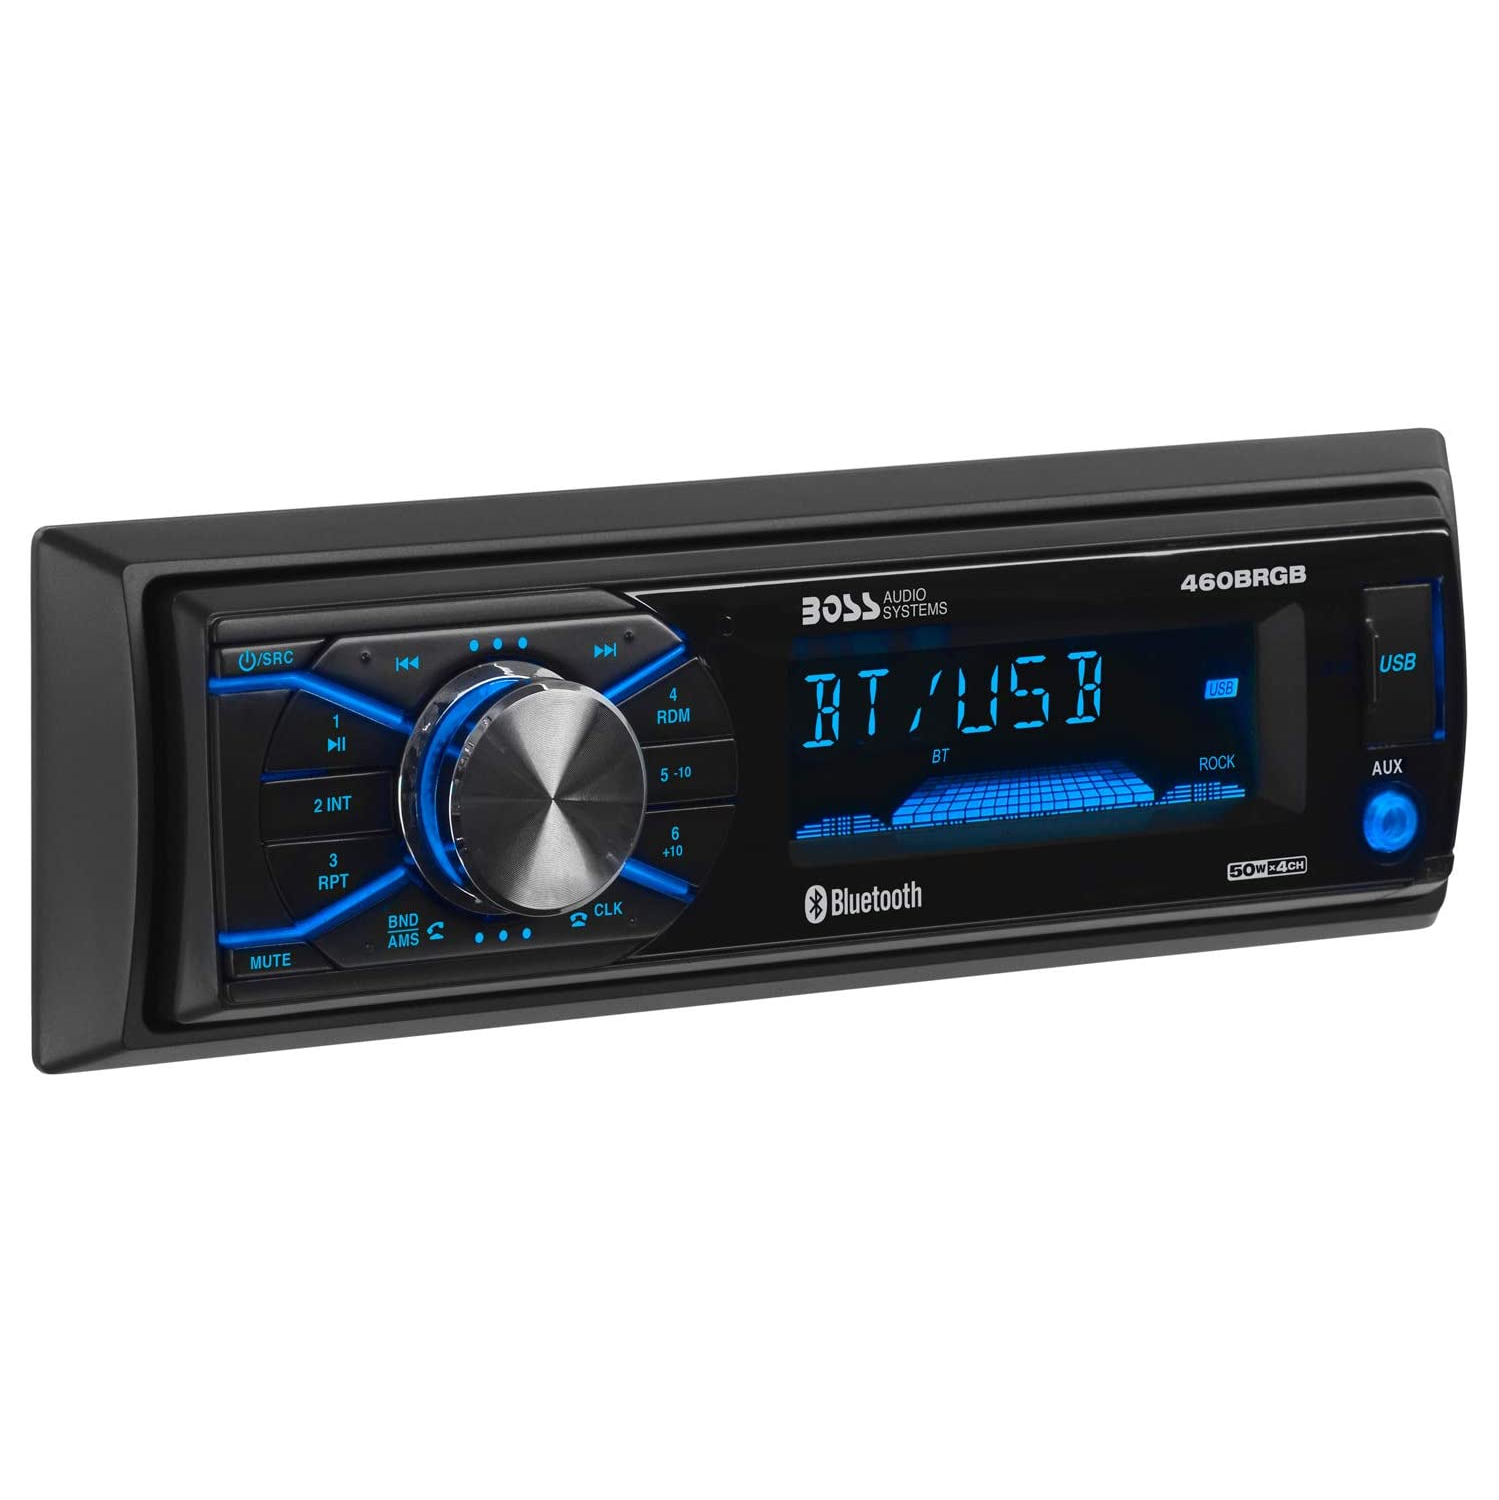 BOSS Audio Systems 460BRGB Multimedia Car Stereo - Single Din, MP3, USB Port, no CD DVD Player, AUX Input, AM FM Radio Receiver